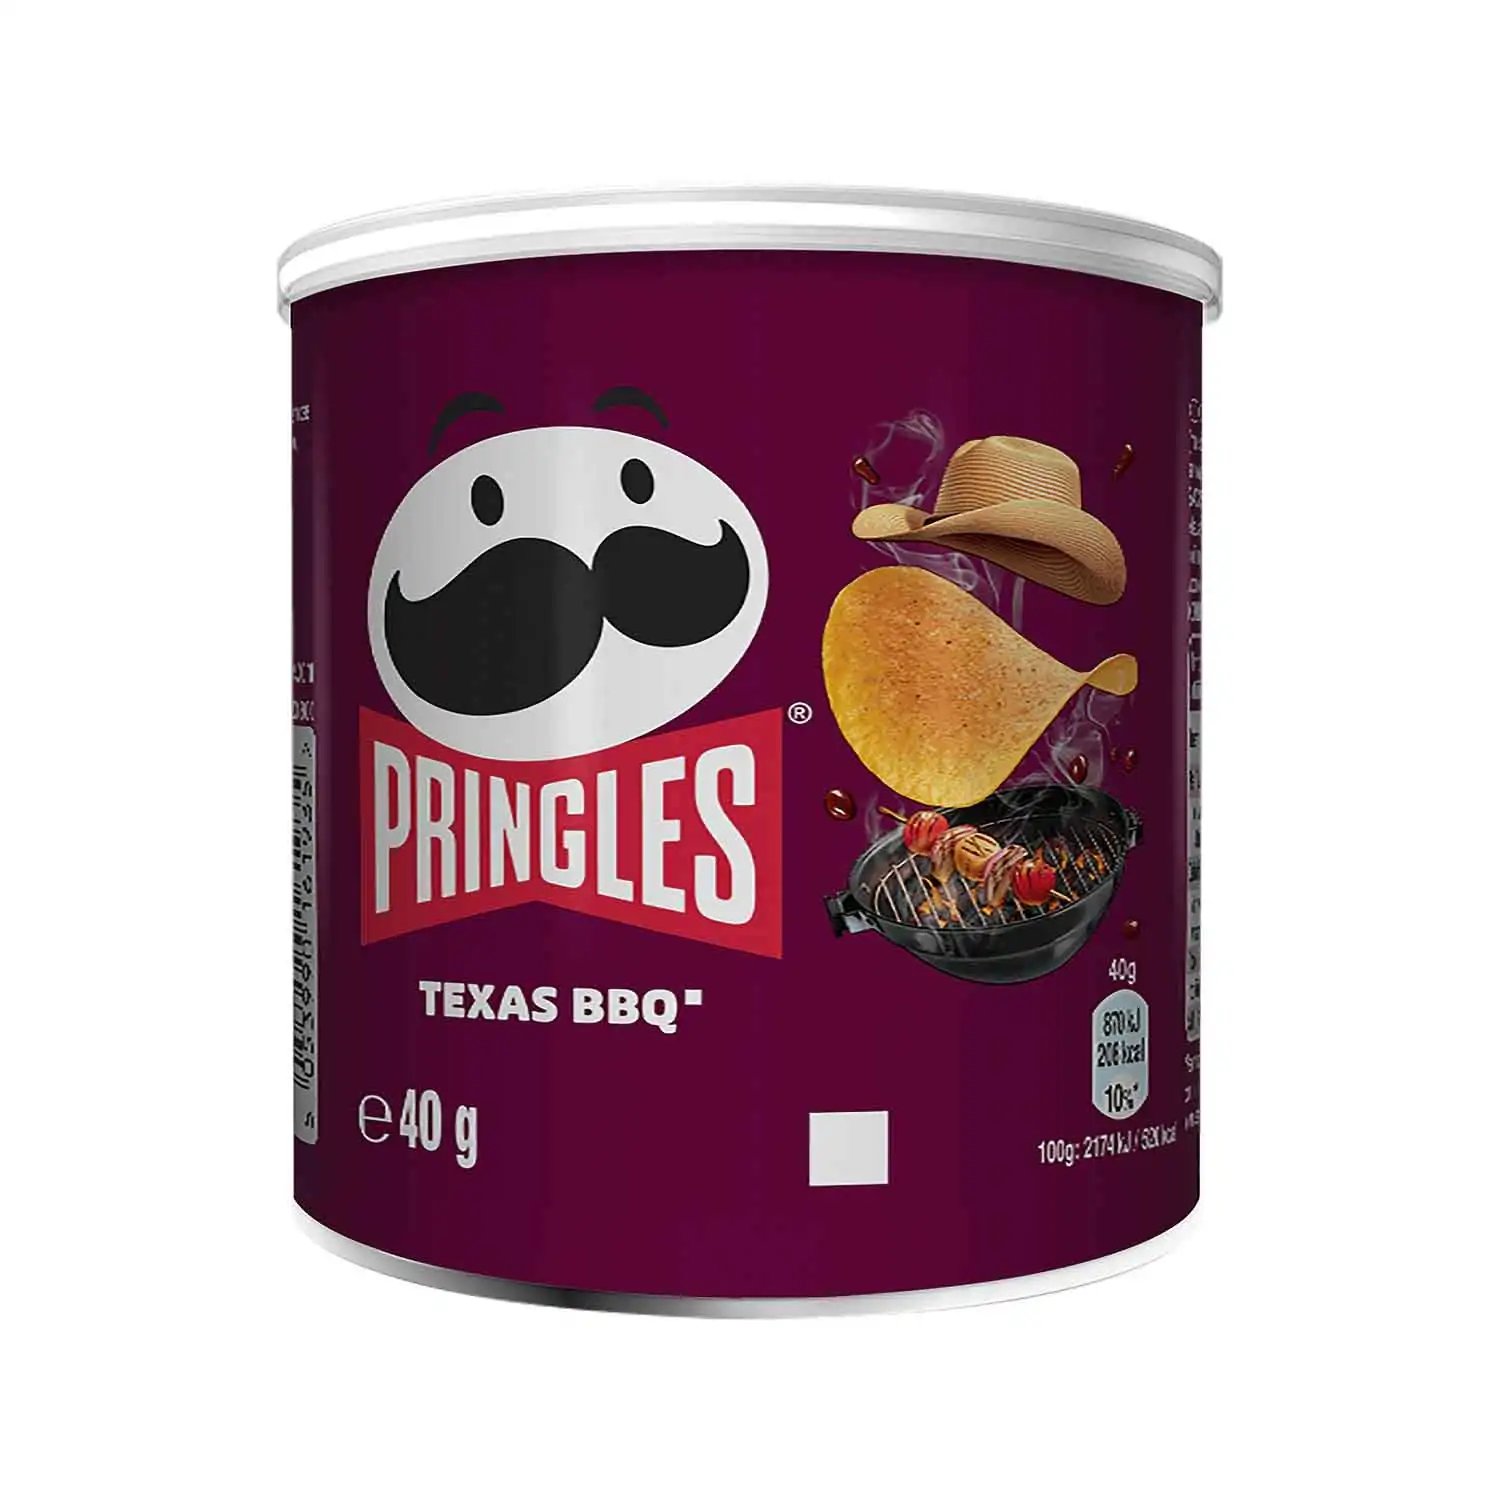 Pringles texas bbq sauce 40g